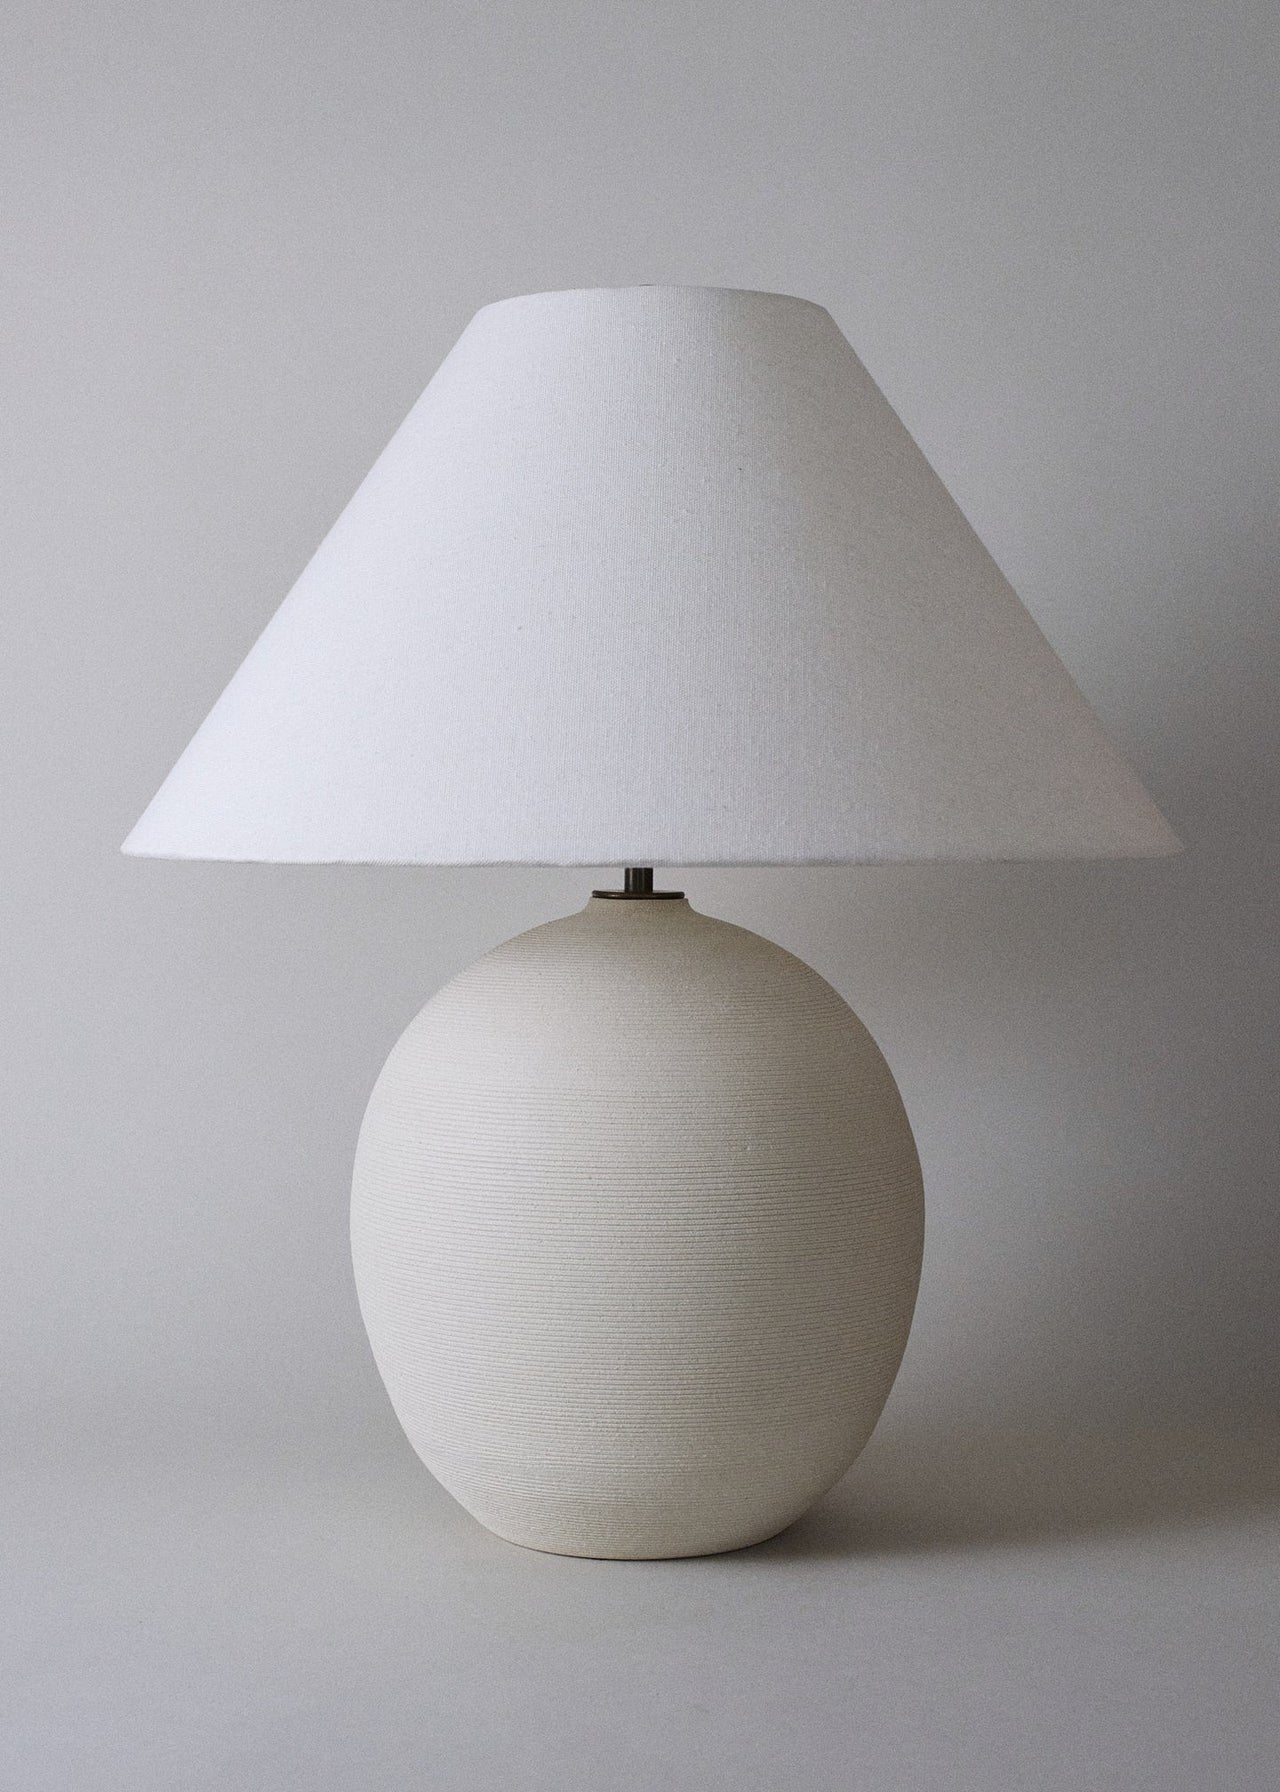 Lamps - Victoria Morris Pottery